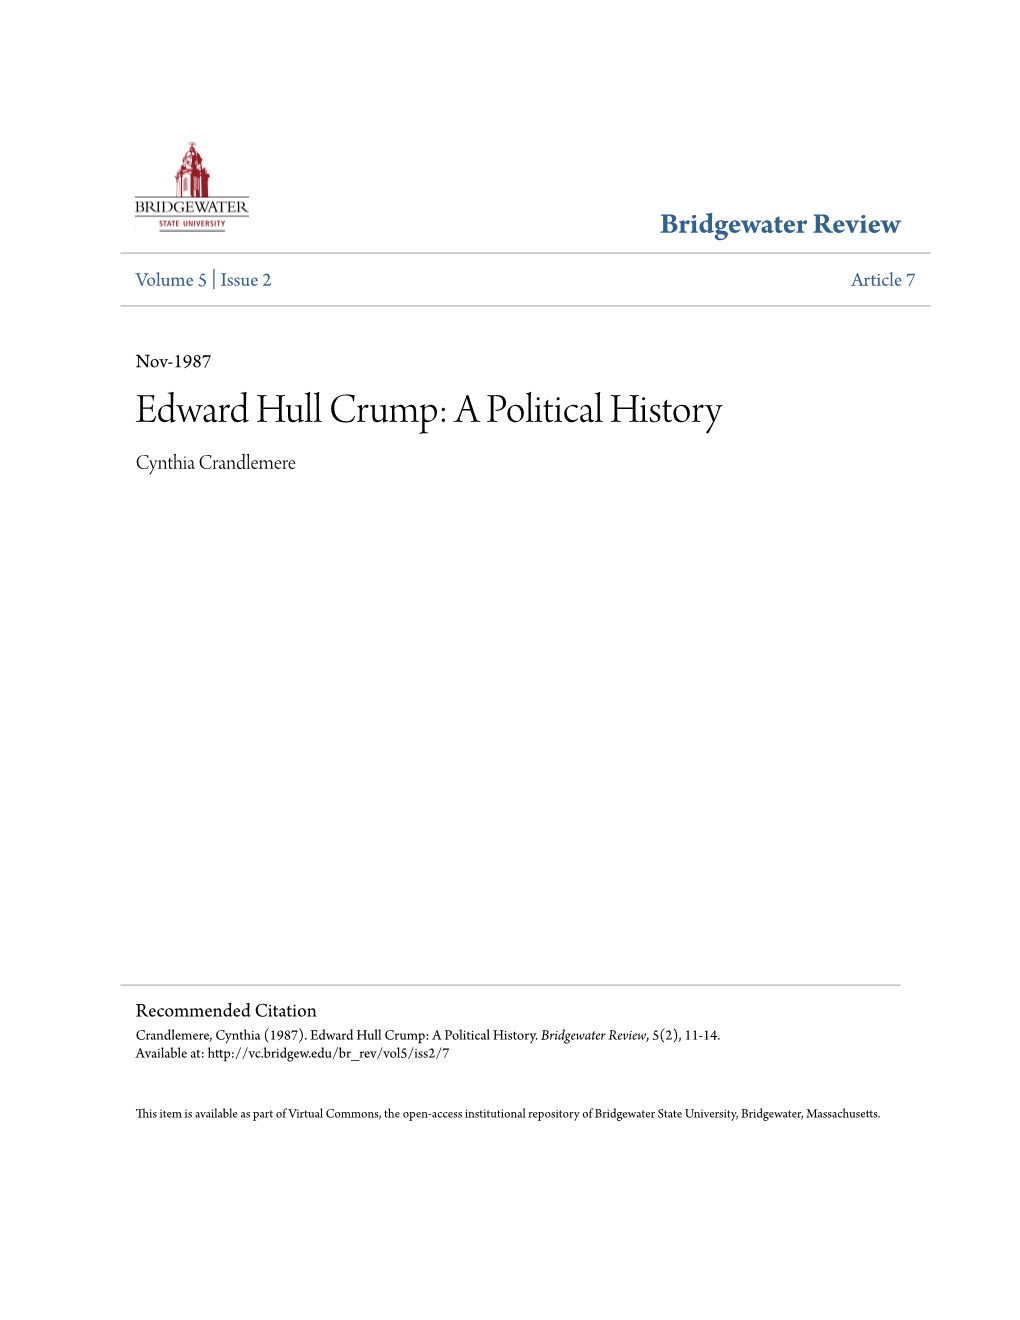 Edward Hull Crump: a Political History Cynthia Crandlemere